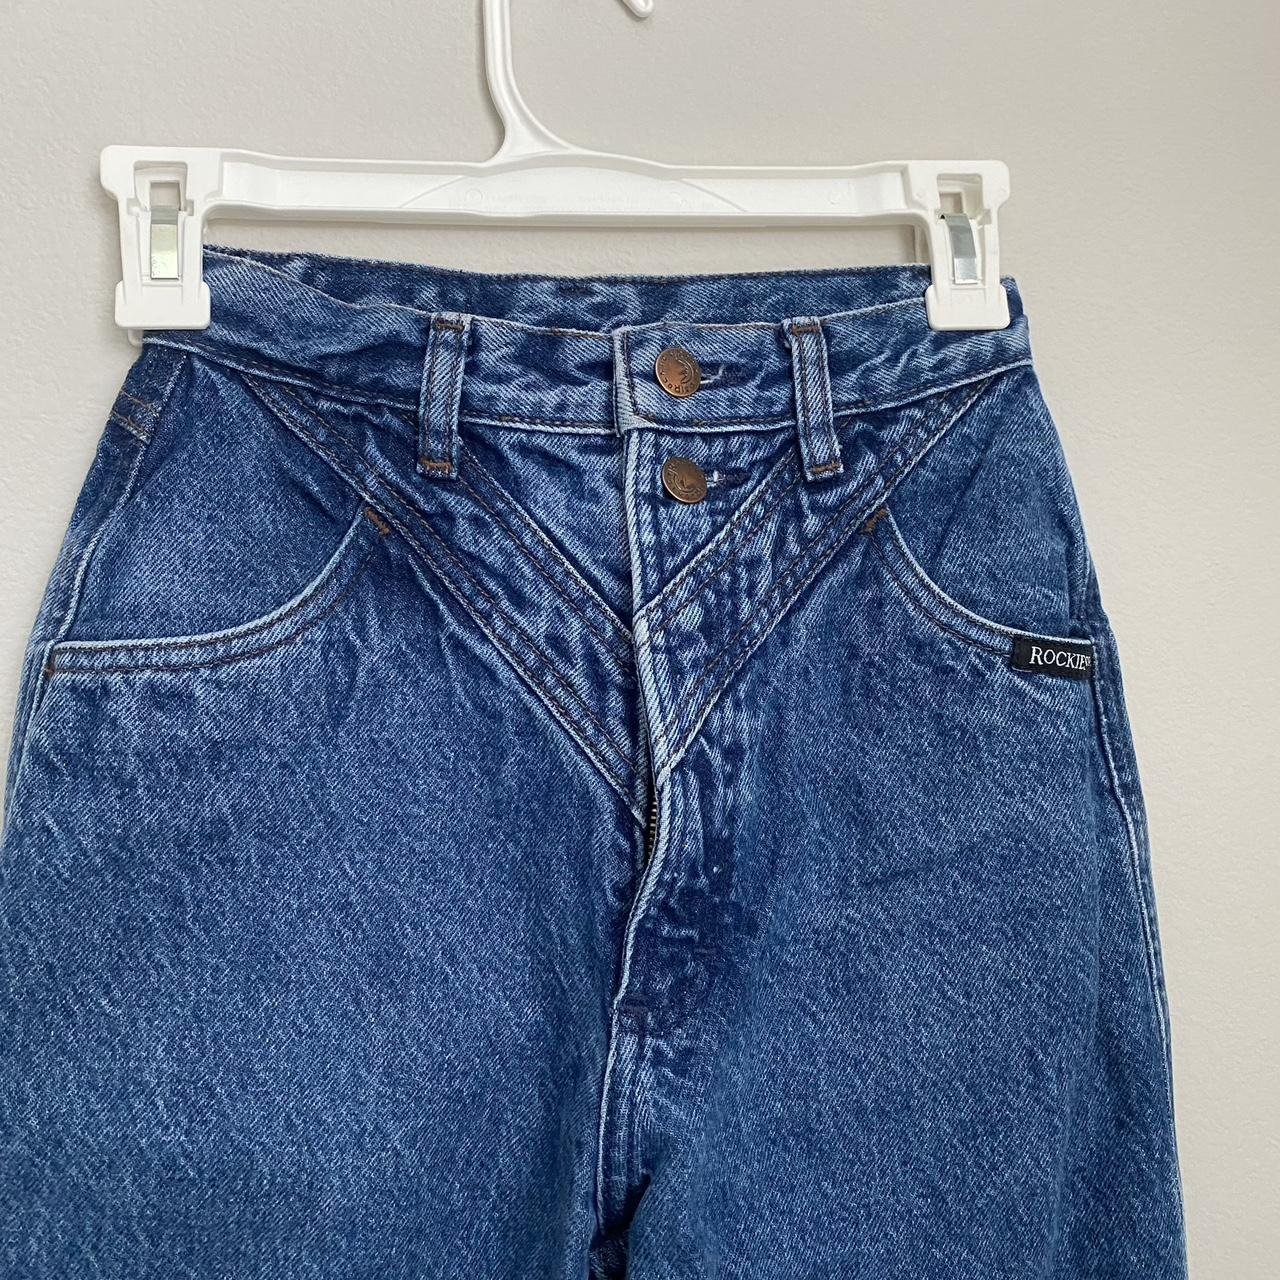 vintage dark wash rockies jeans says waist size 26”... - Depop